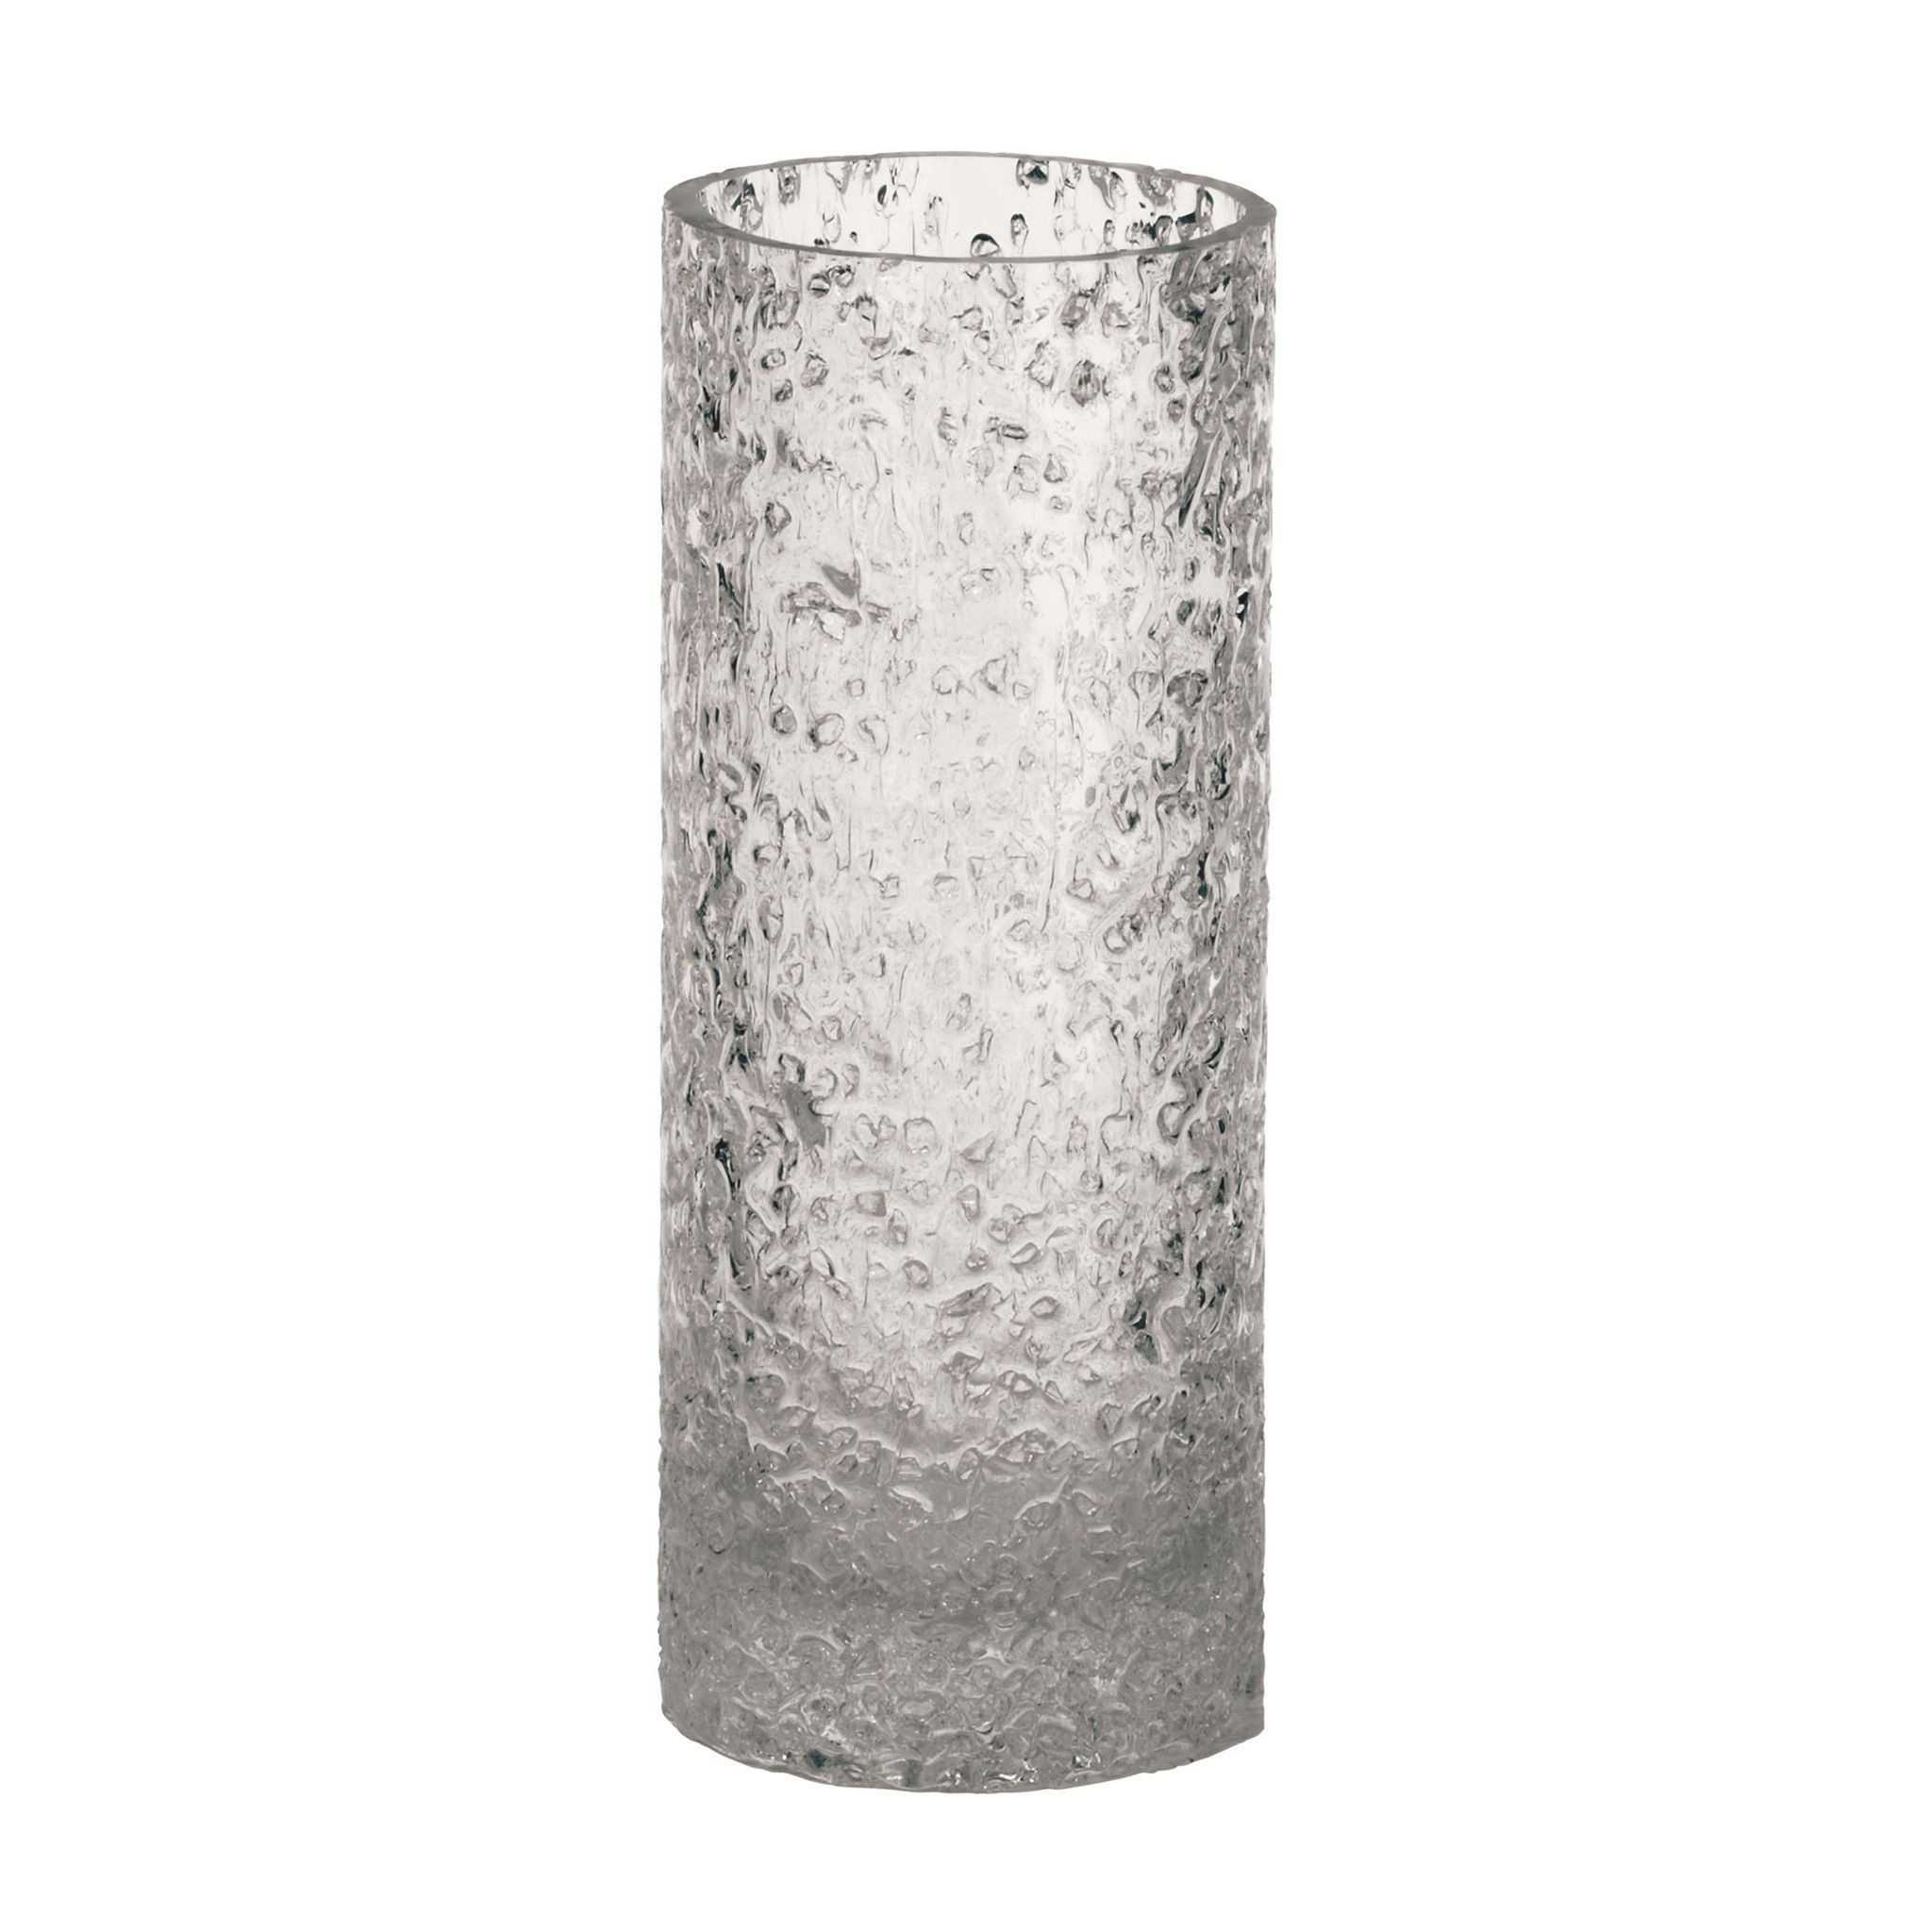 10 Ideal Narrow Neck Vase 2024 free download narrow neck vase of decmode round silhouette ceramic vase 71732 with ice rock salt vase